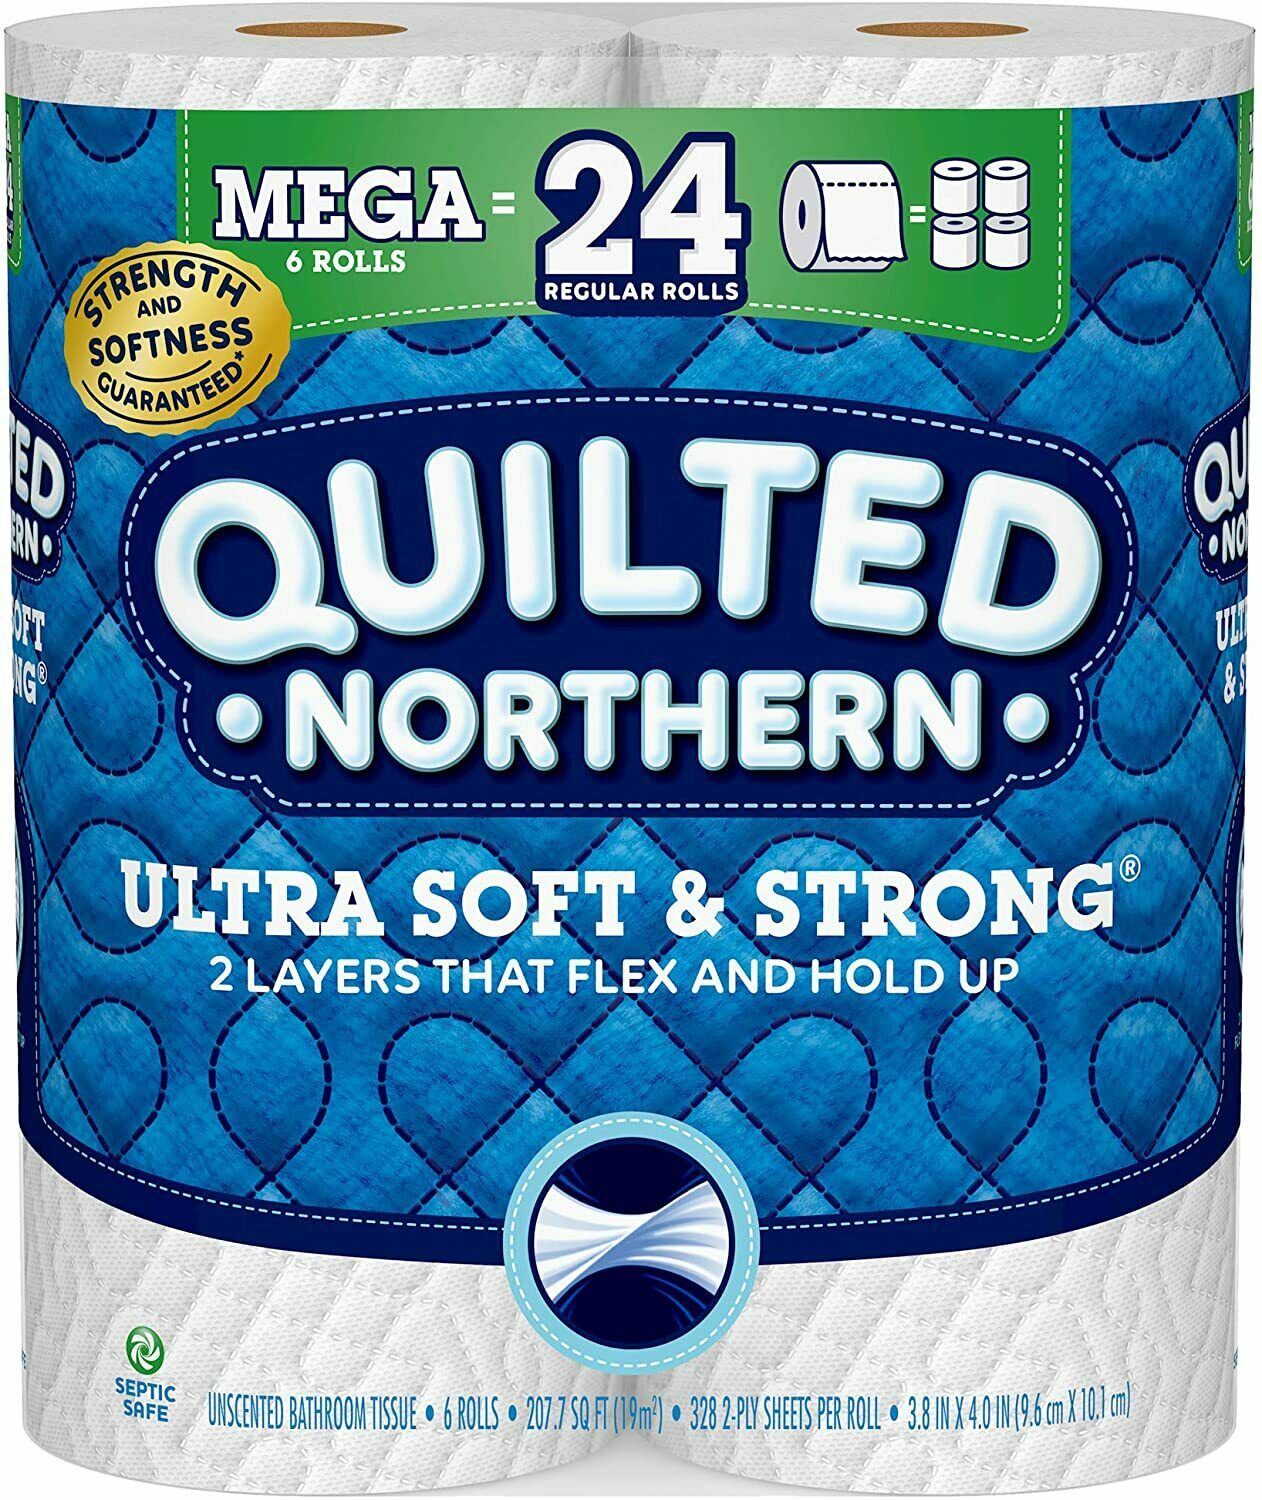 Ultra Soft Toilet Paper Tissue Quilted Northern 6 Mega Rolls = 24 Regular Rolls